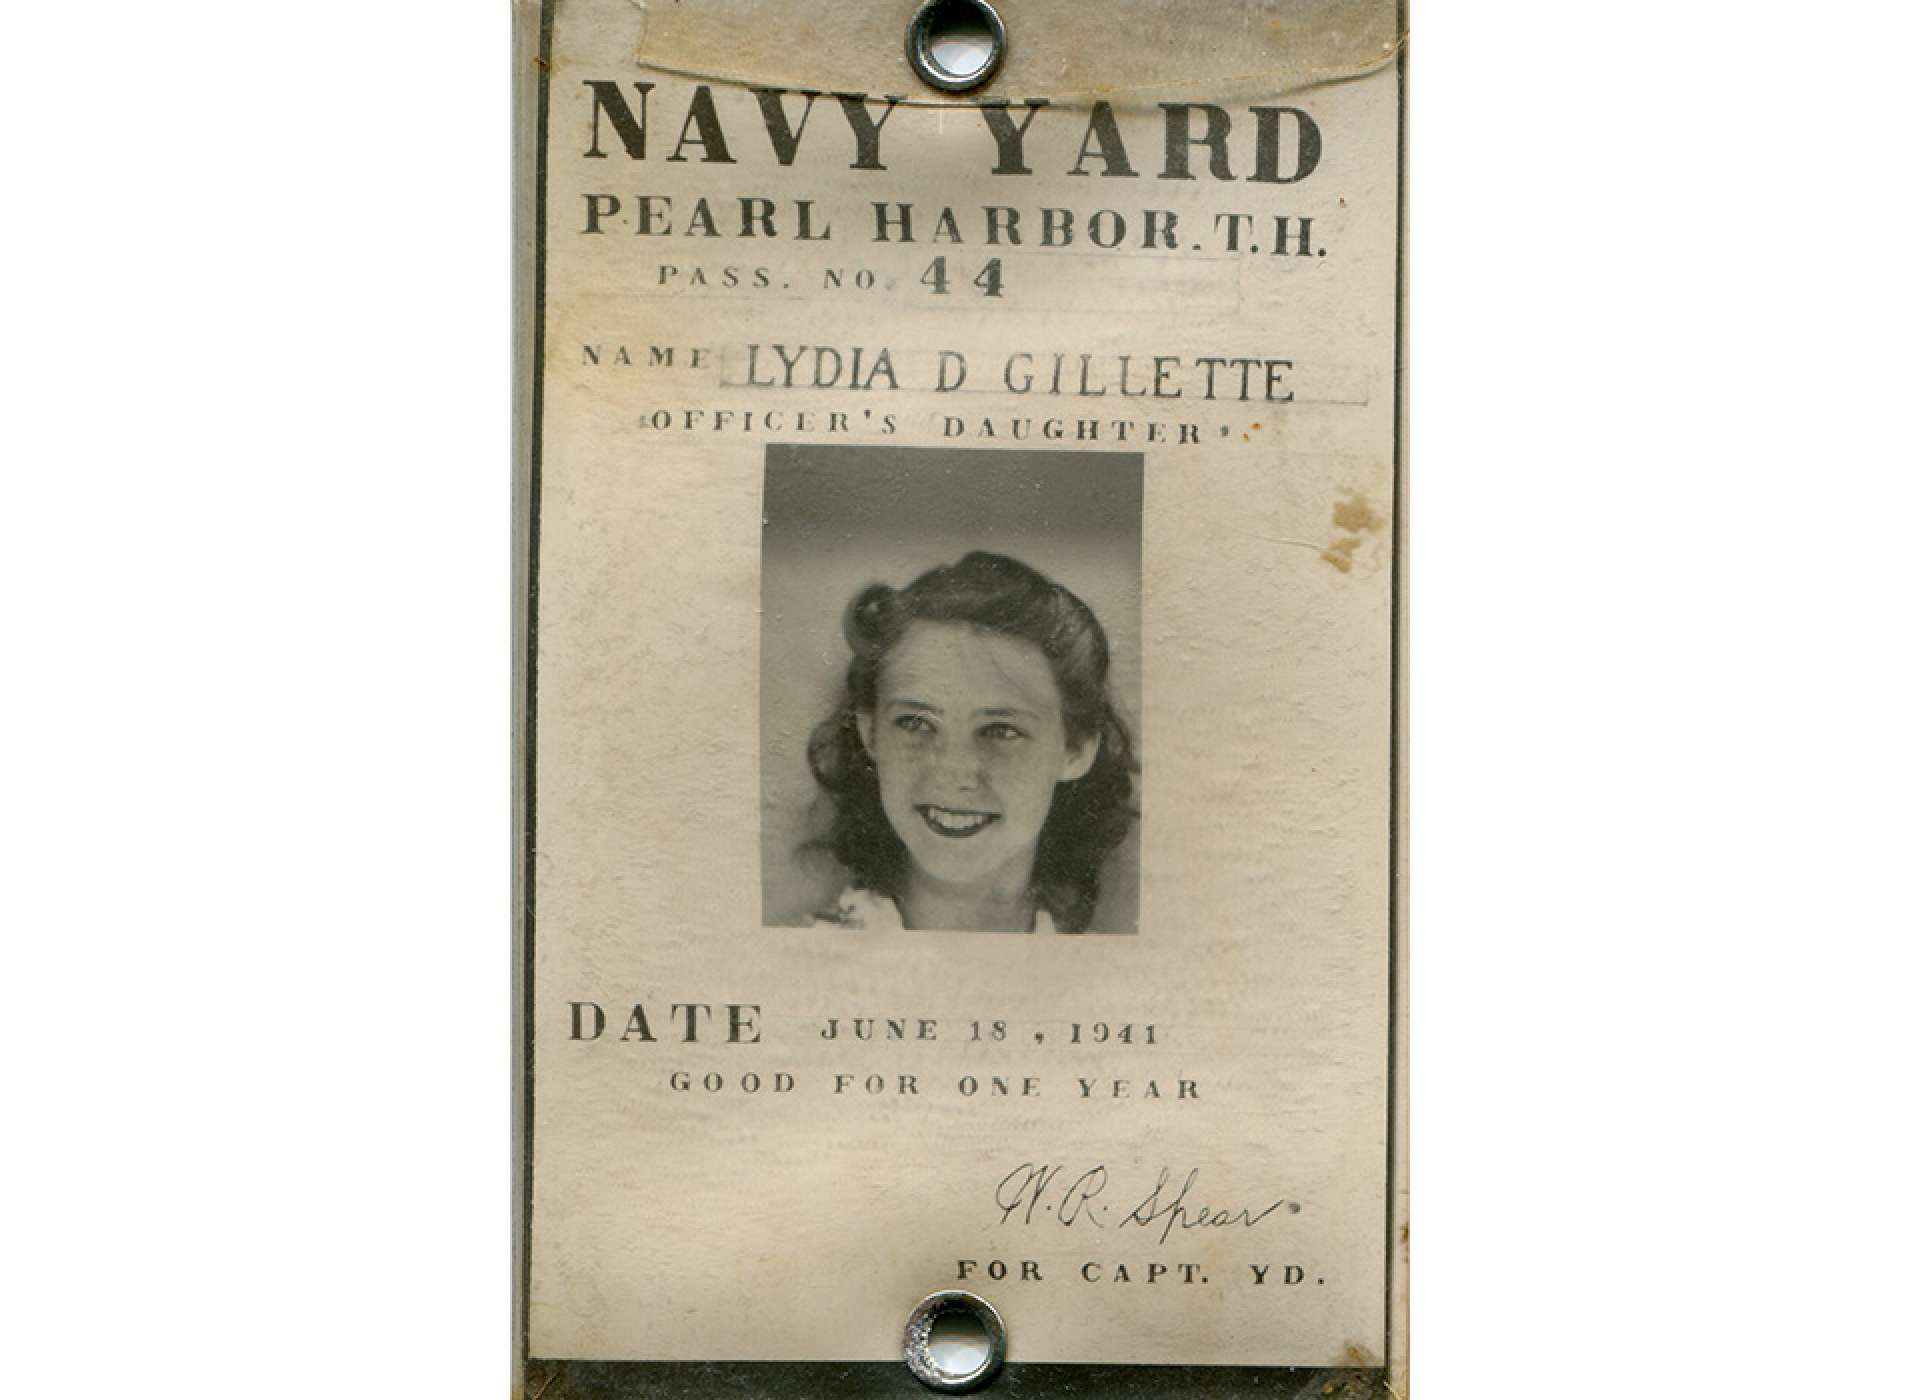 Lydia Diane Grant&#039;s Pearl Harbor Navy Yard ID. Image courtesy of Lydia Grant.